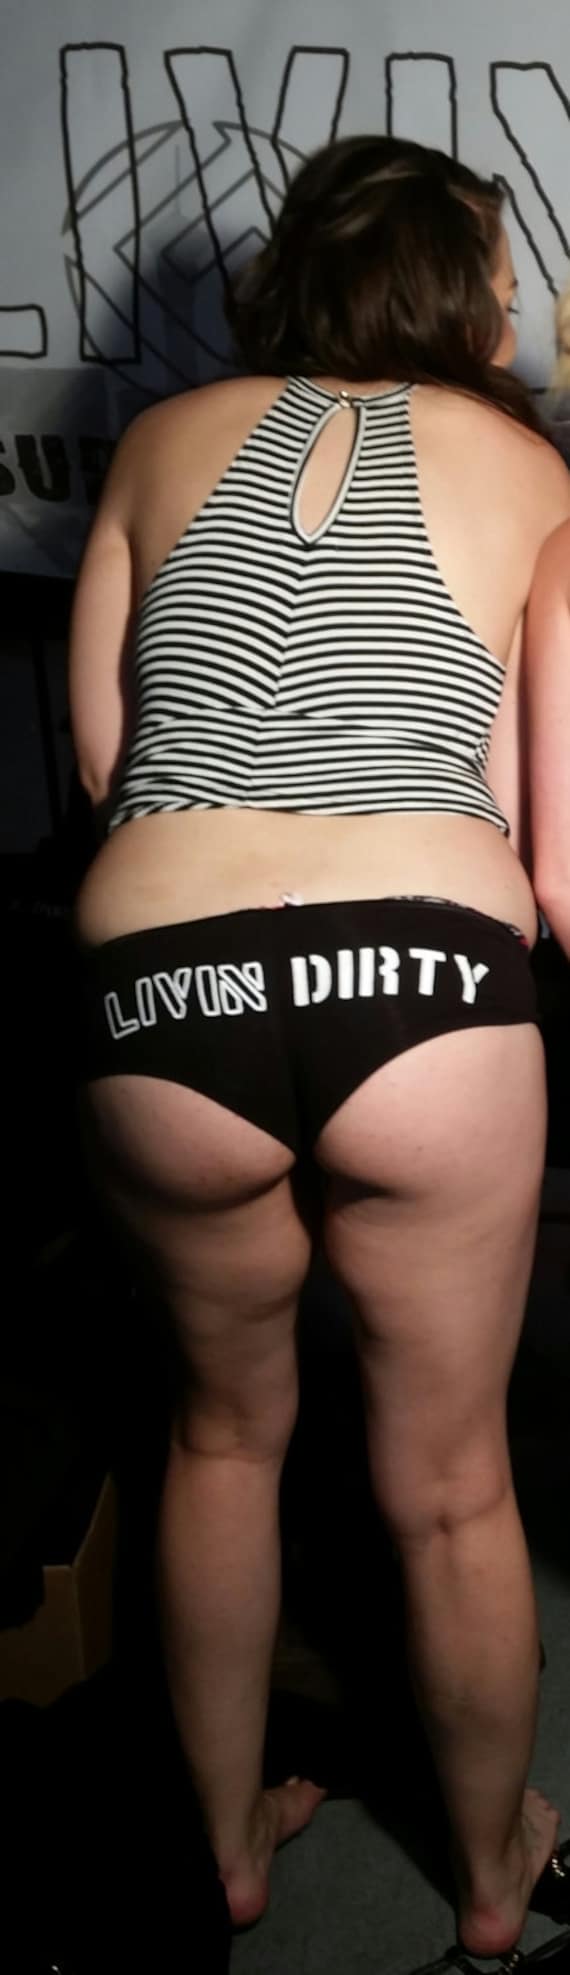 Small Woman Dirty Ass